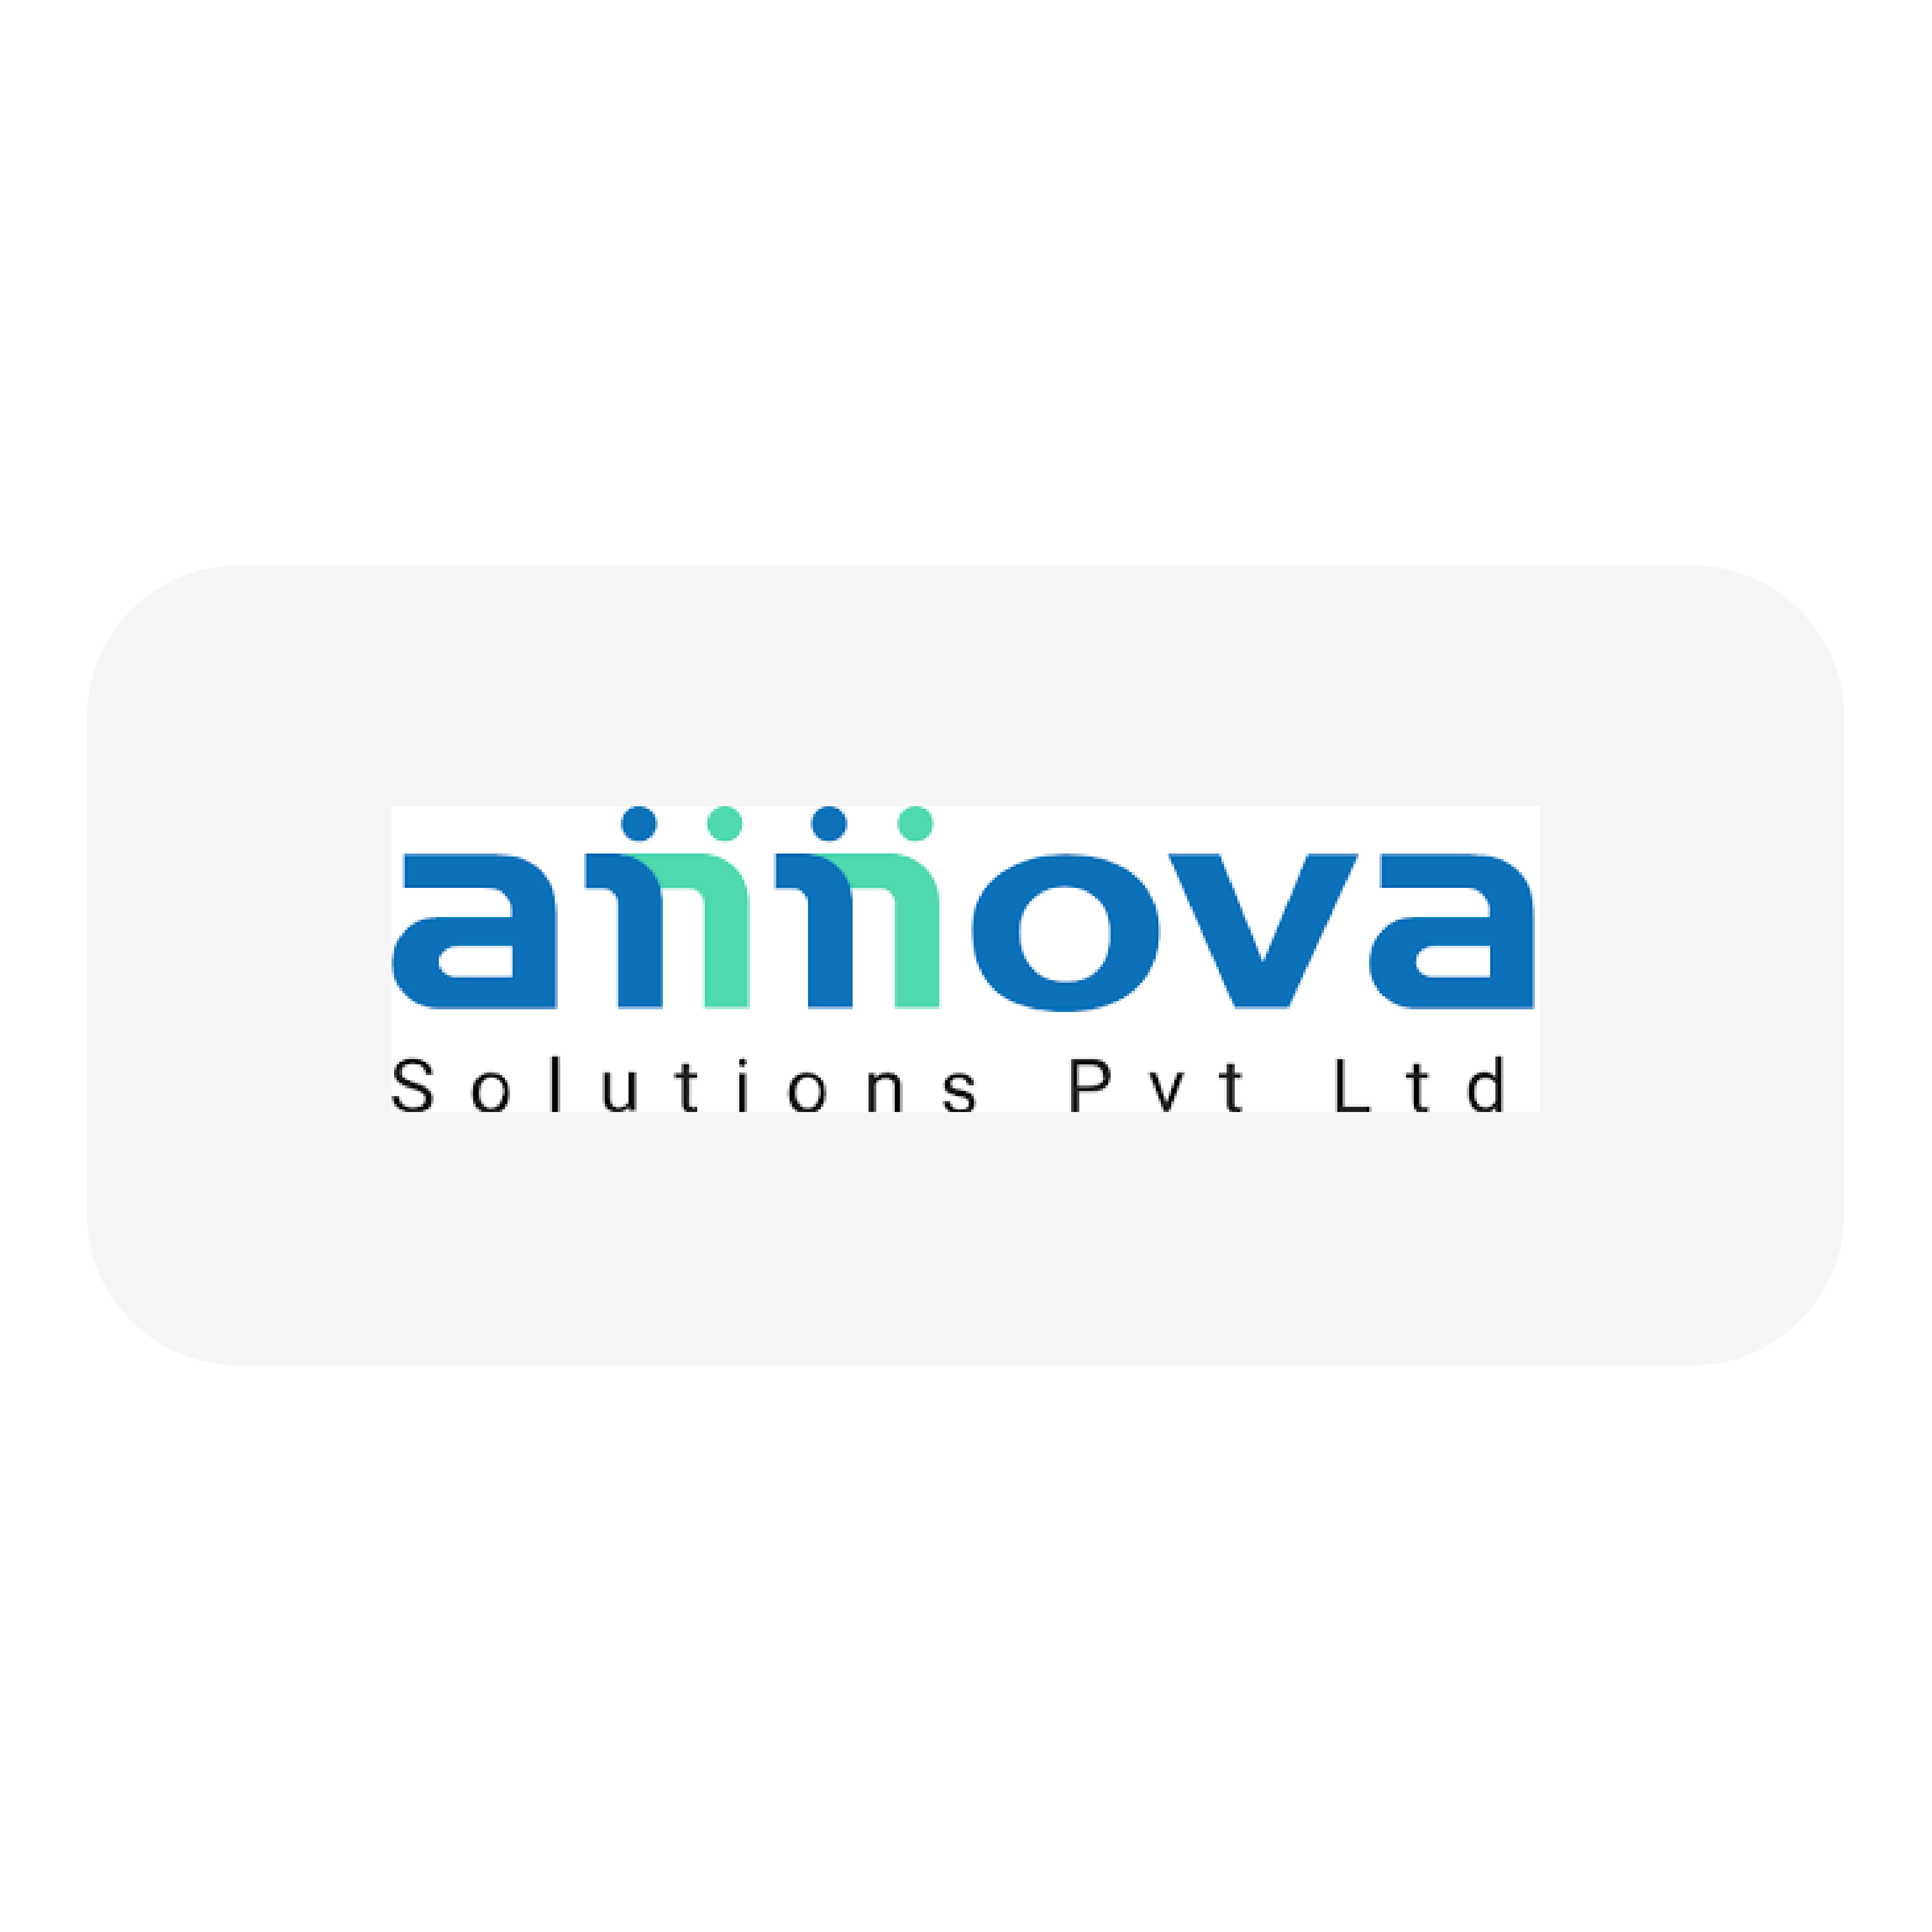 annova solutions-01